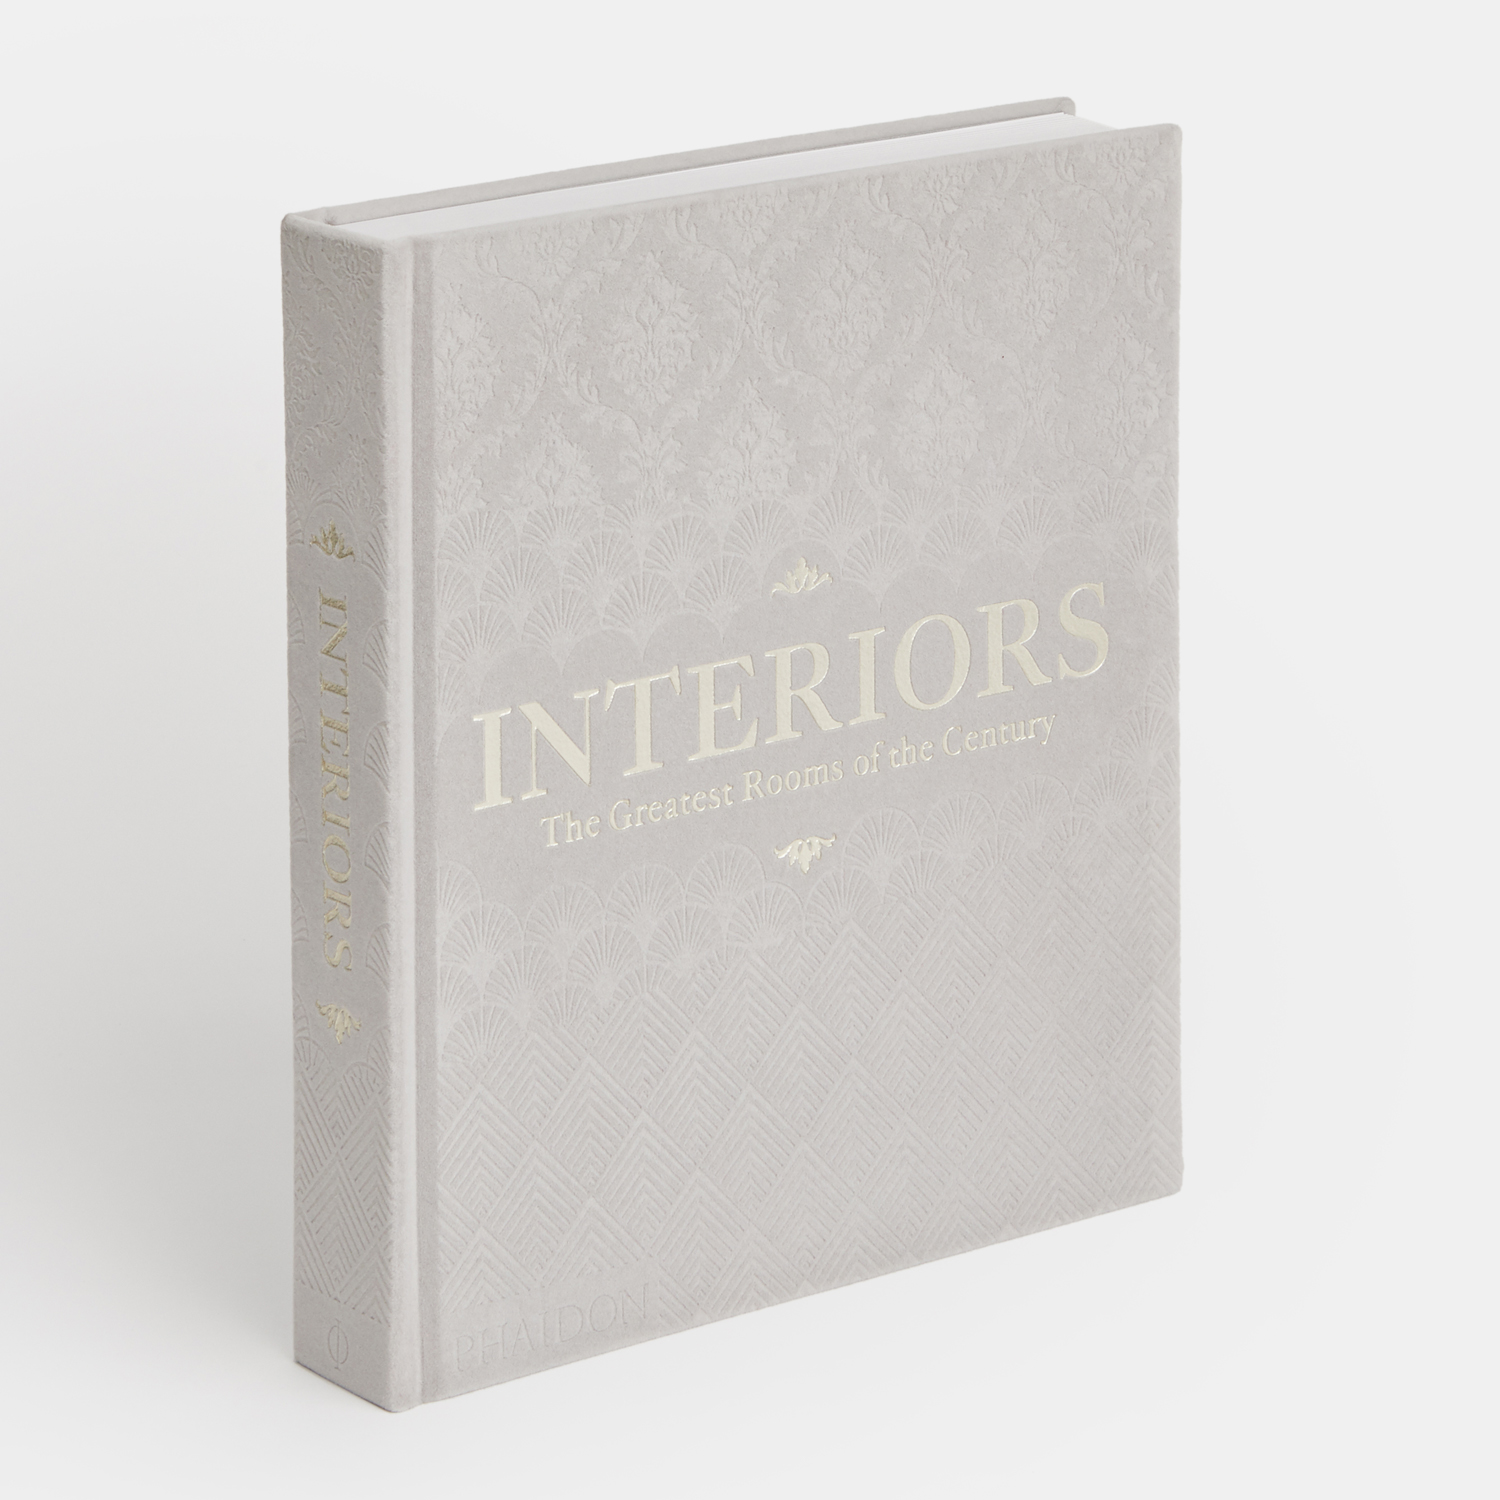 The platinum gray edition of Interiors